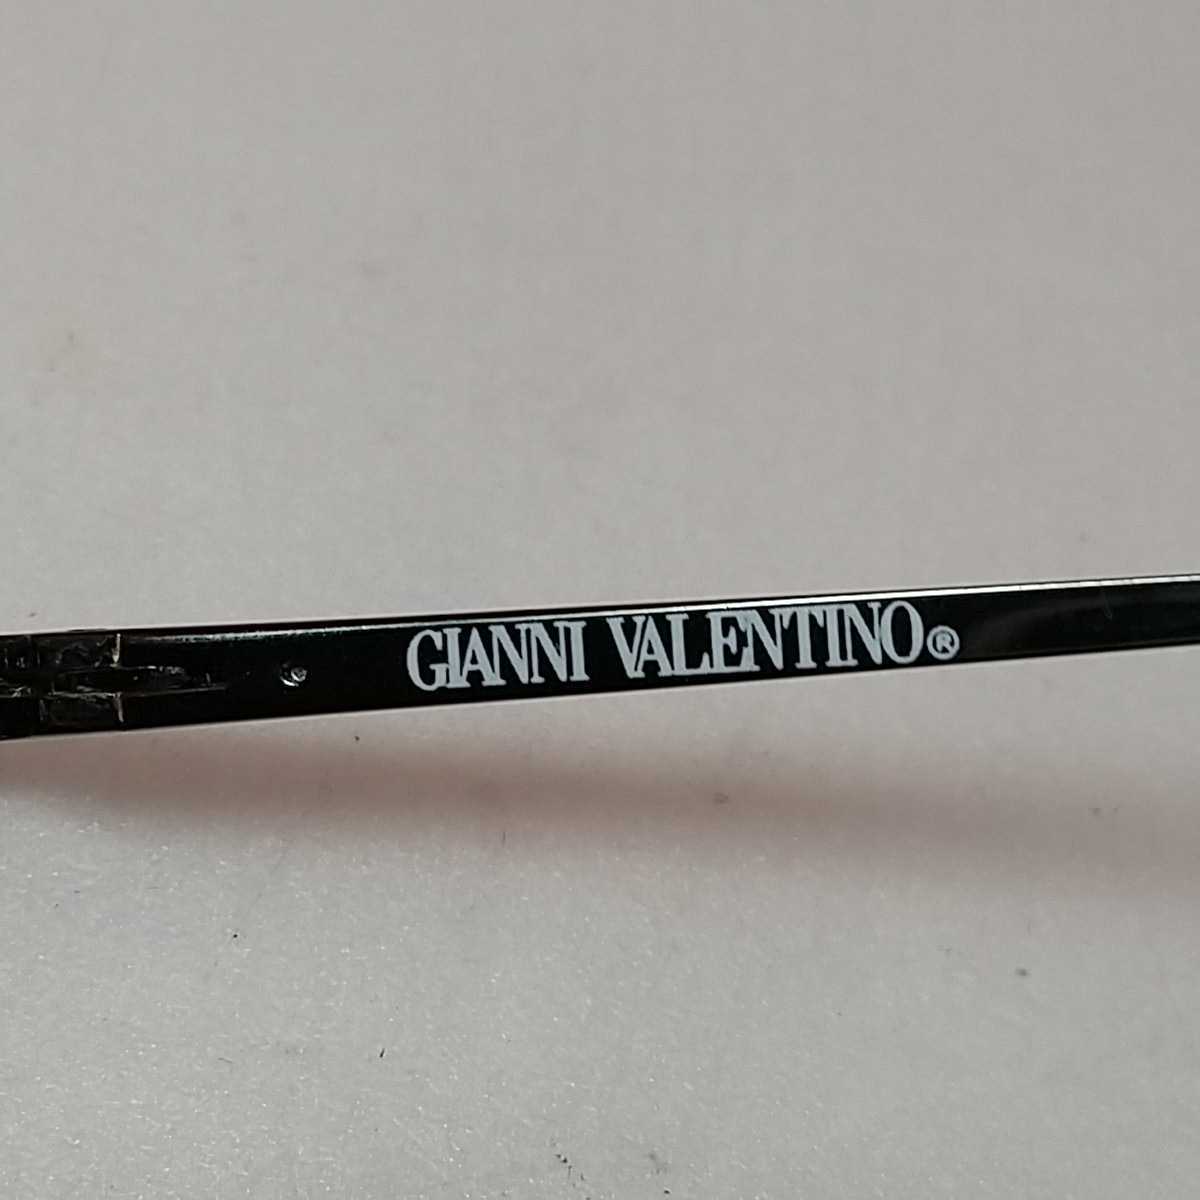  Gien ni Valentino GIANNI VALENTINO раз нет солнцезащитные очки .. темно-синий серия прекрасный товар 